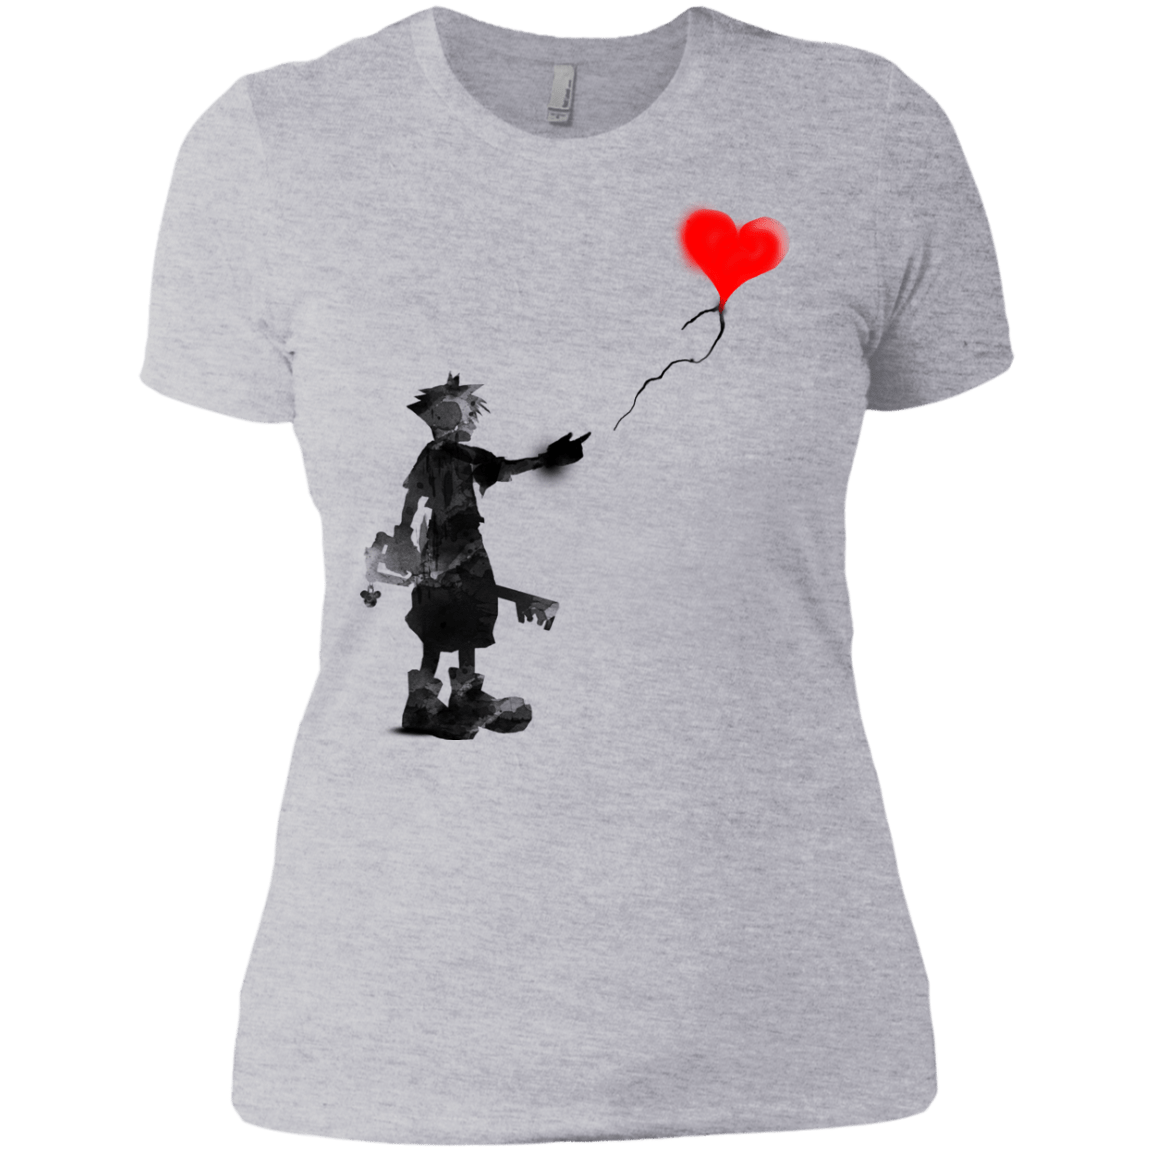 Boy and Balloon Women's Premium T-Shirt